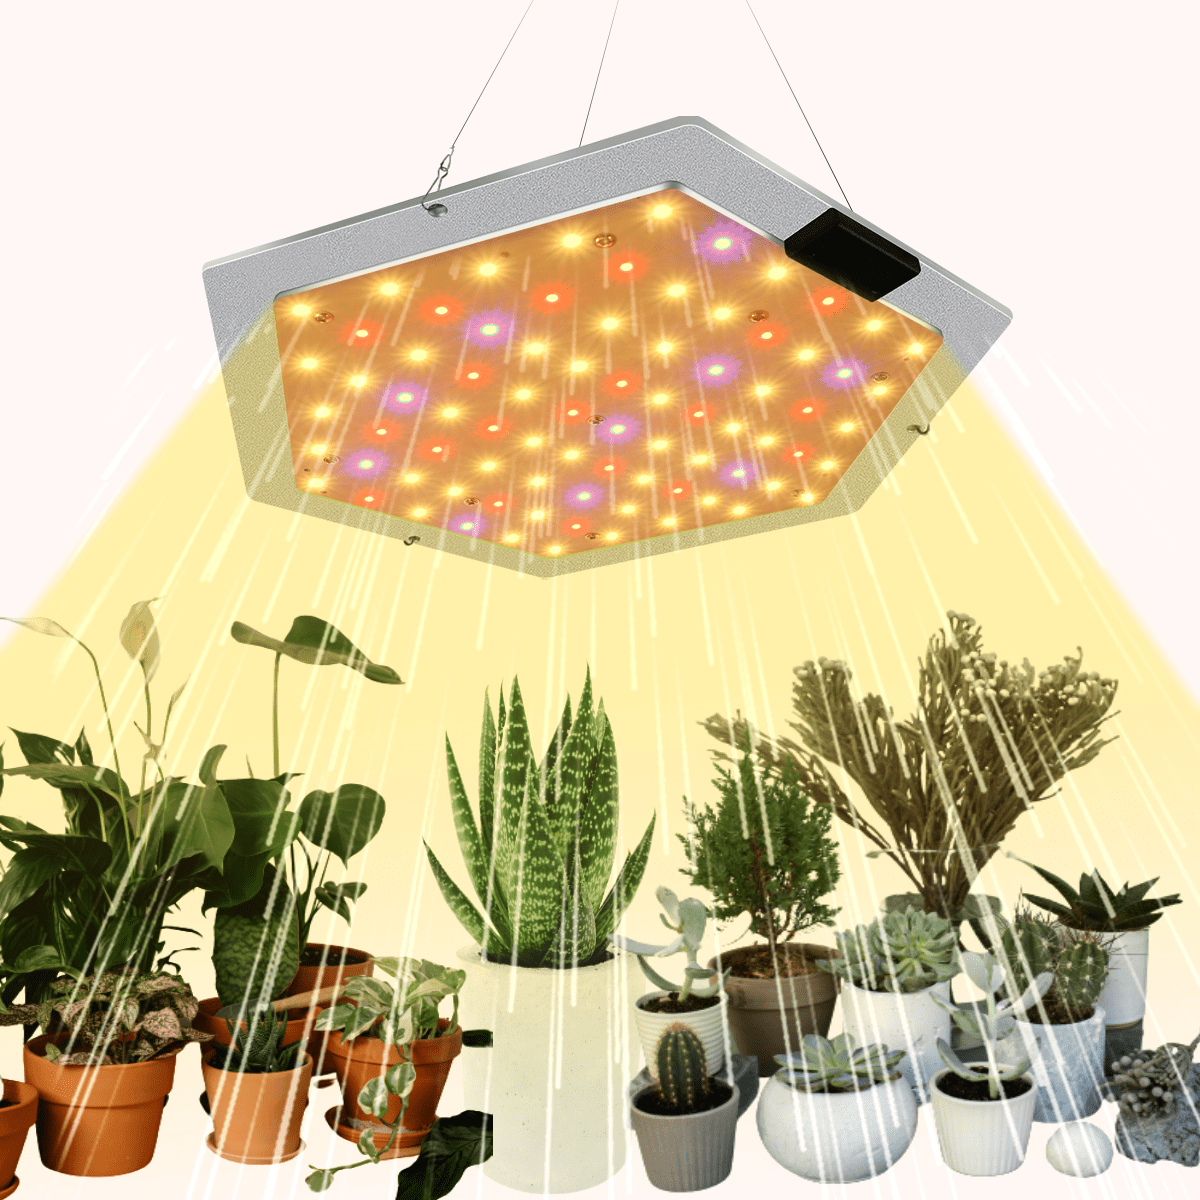 2× 300W Watt COB Led Grow Light Full Spectrum Lamp For Plant Hydroponics Flower